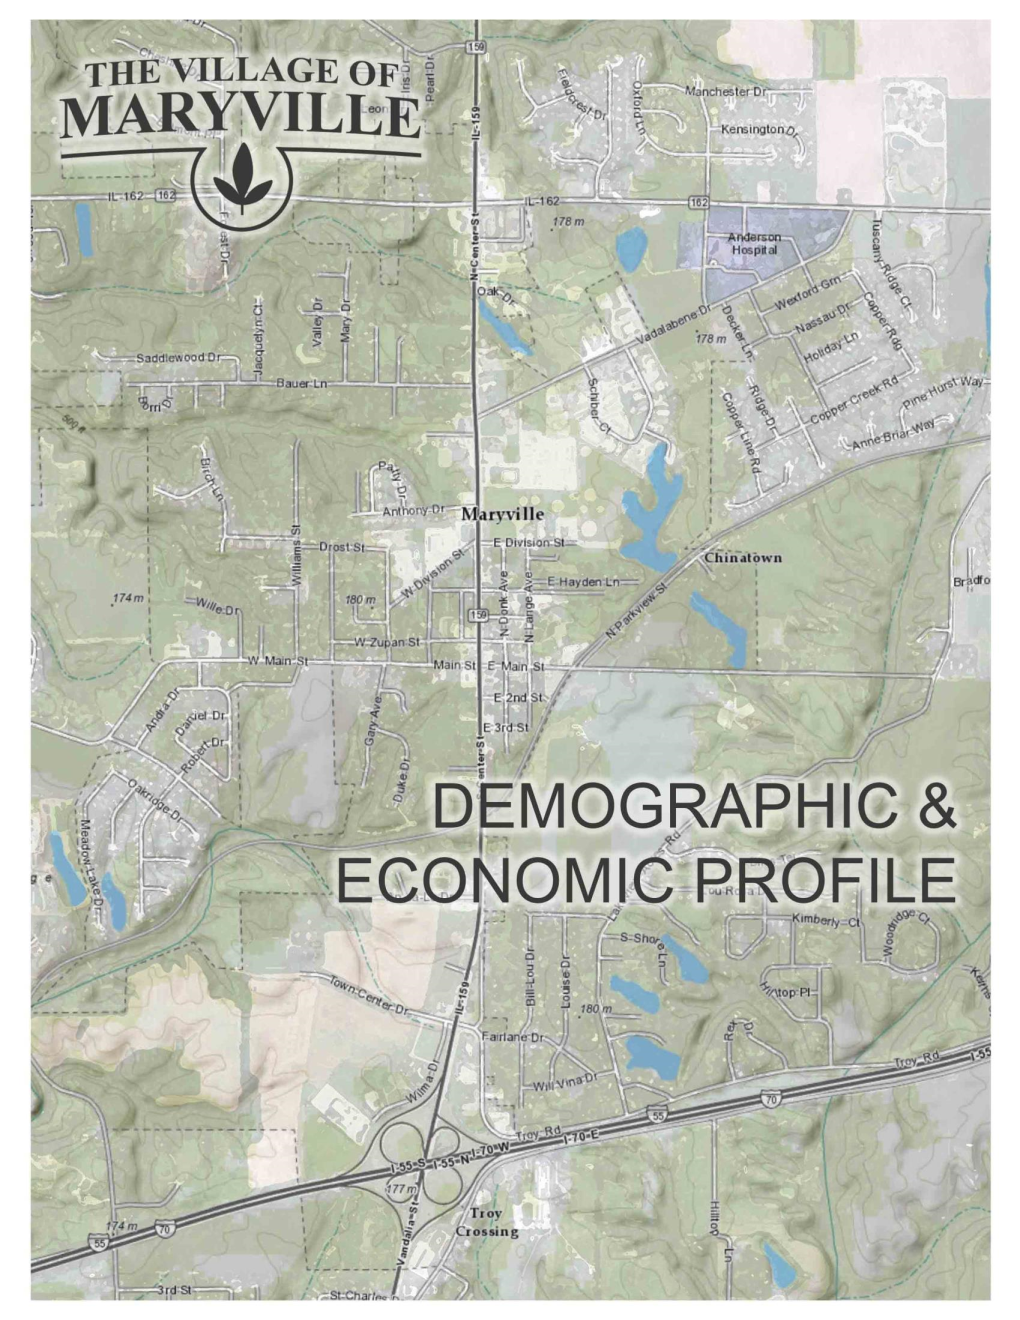 Community Profile/Demographic Information